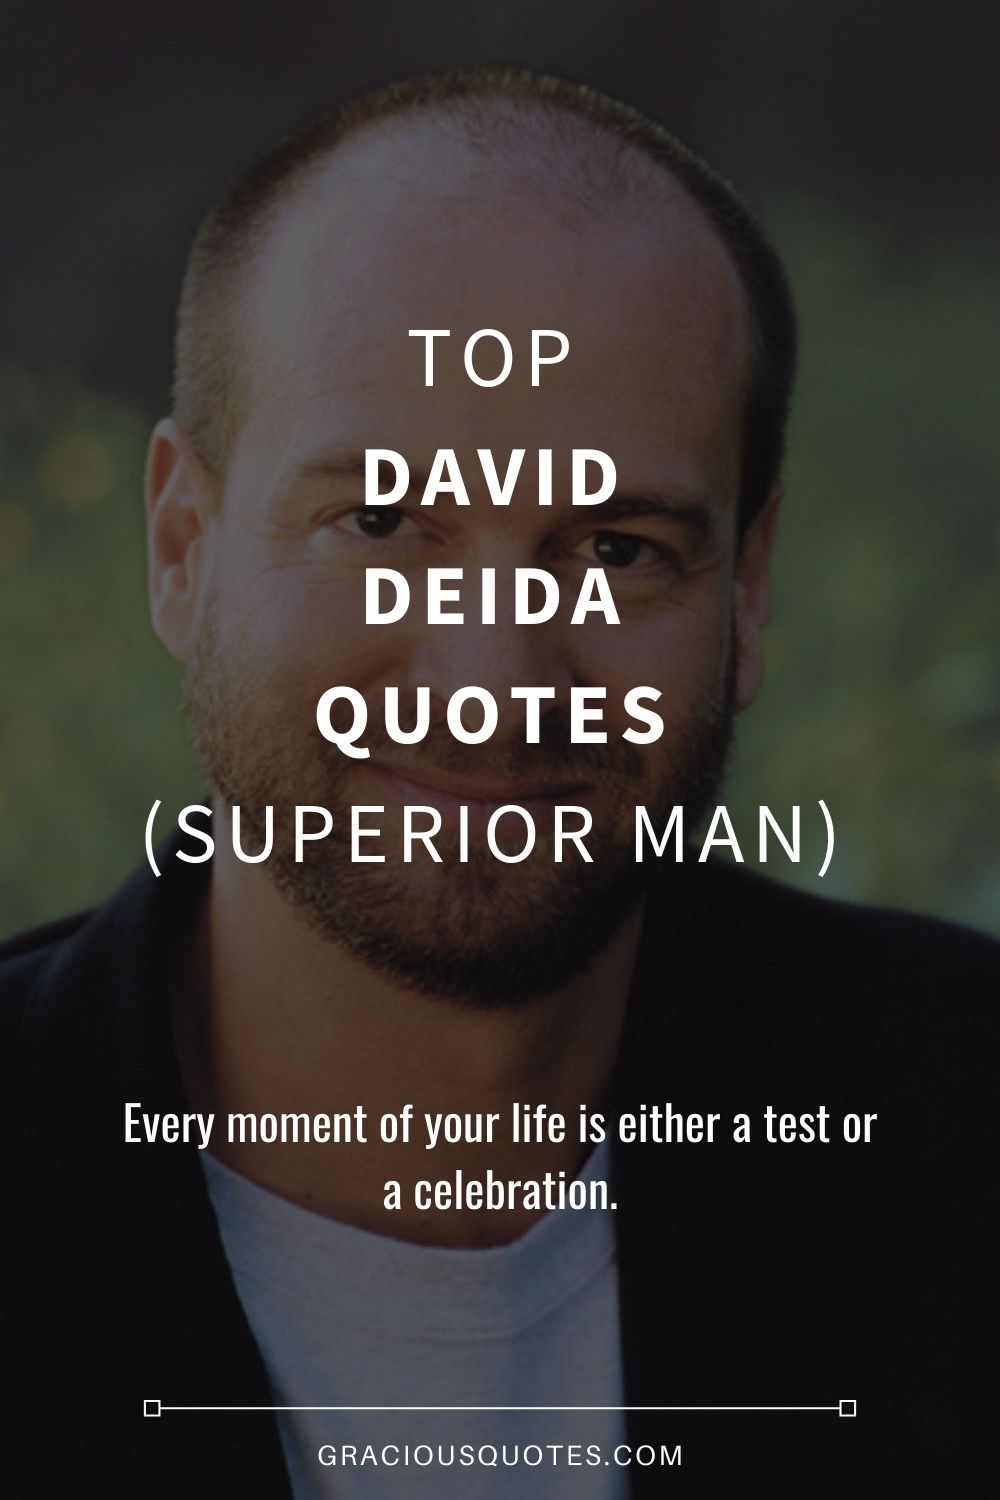 Top David Deida Quotes (SUPERIOR MAN) - Gracious Quotes